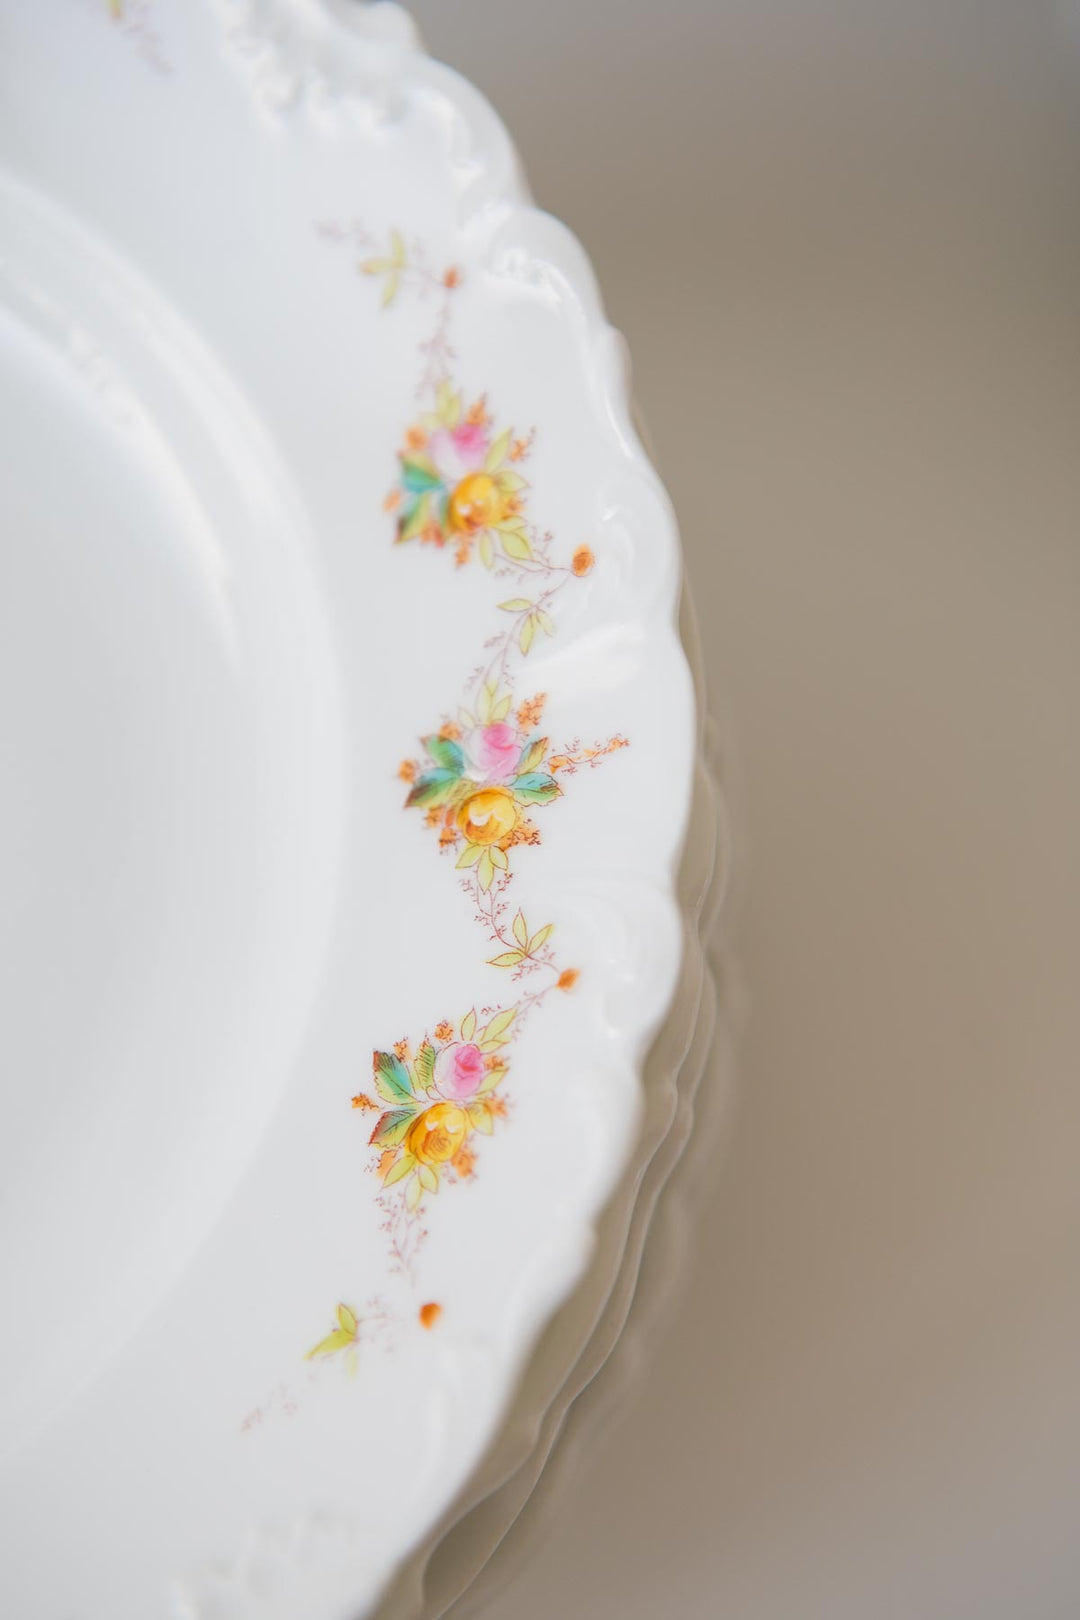 Antigua vajilla porcelana francesa Limoges florecillas amarillas (VENDIDA)